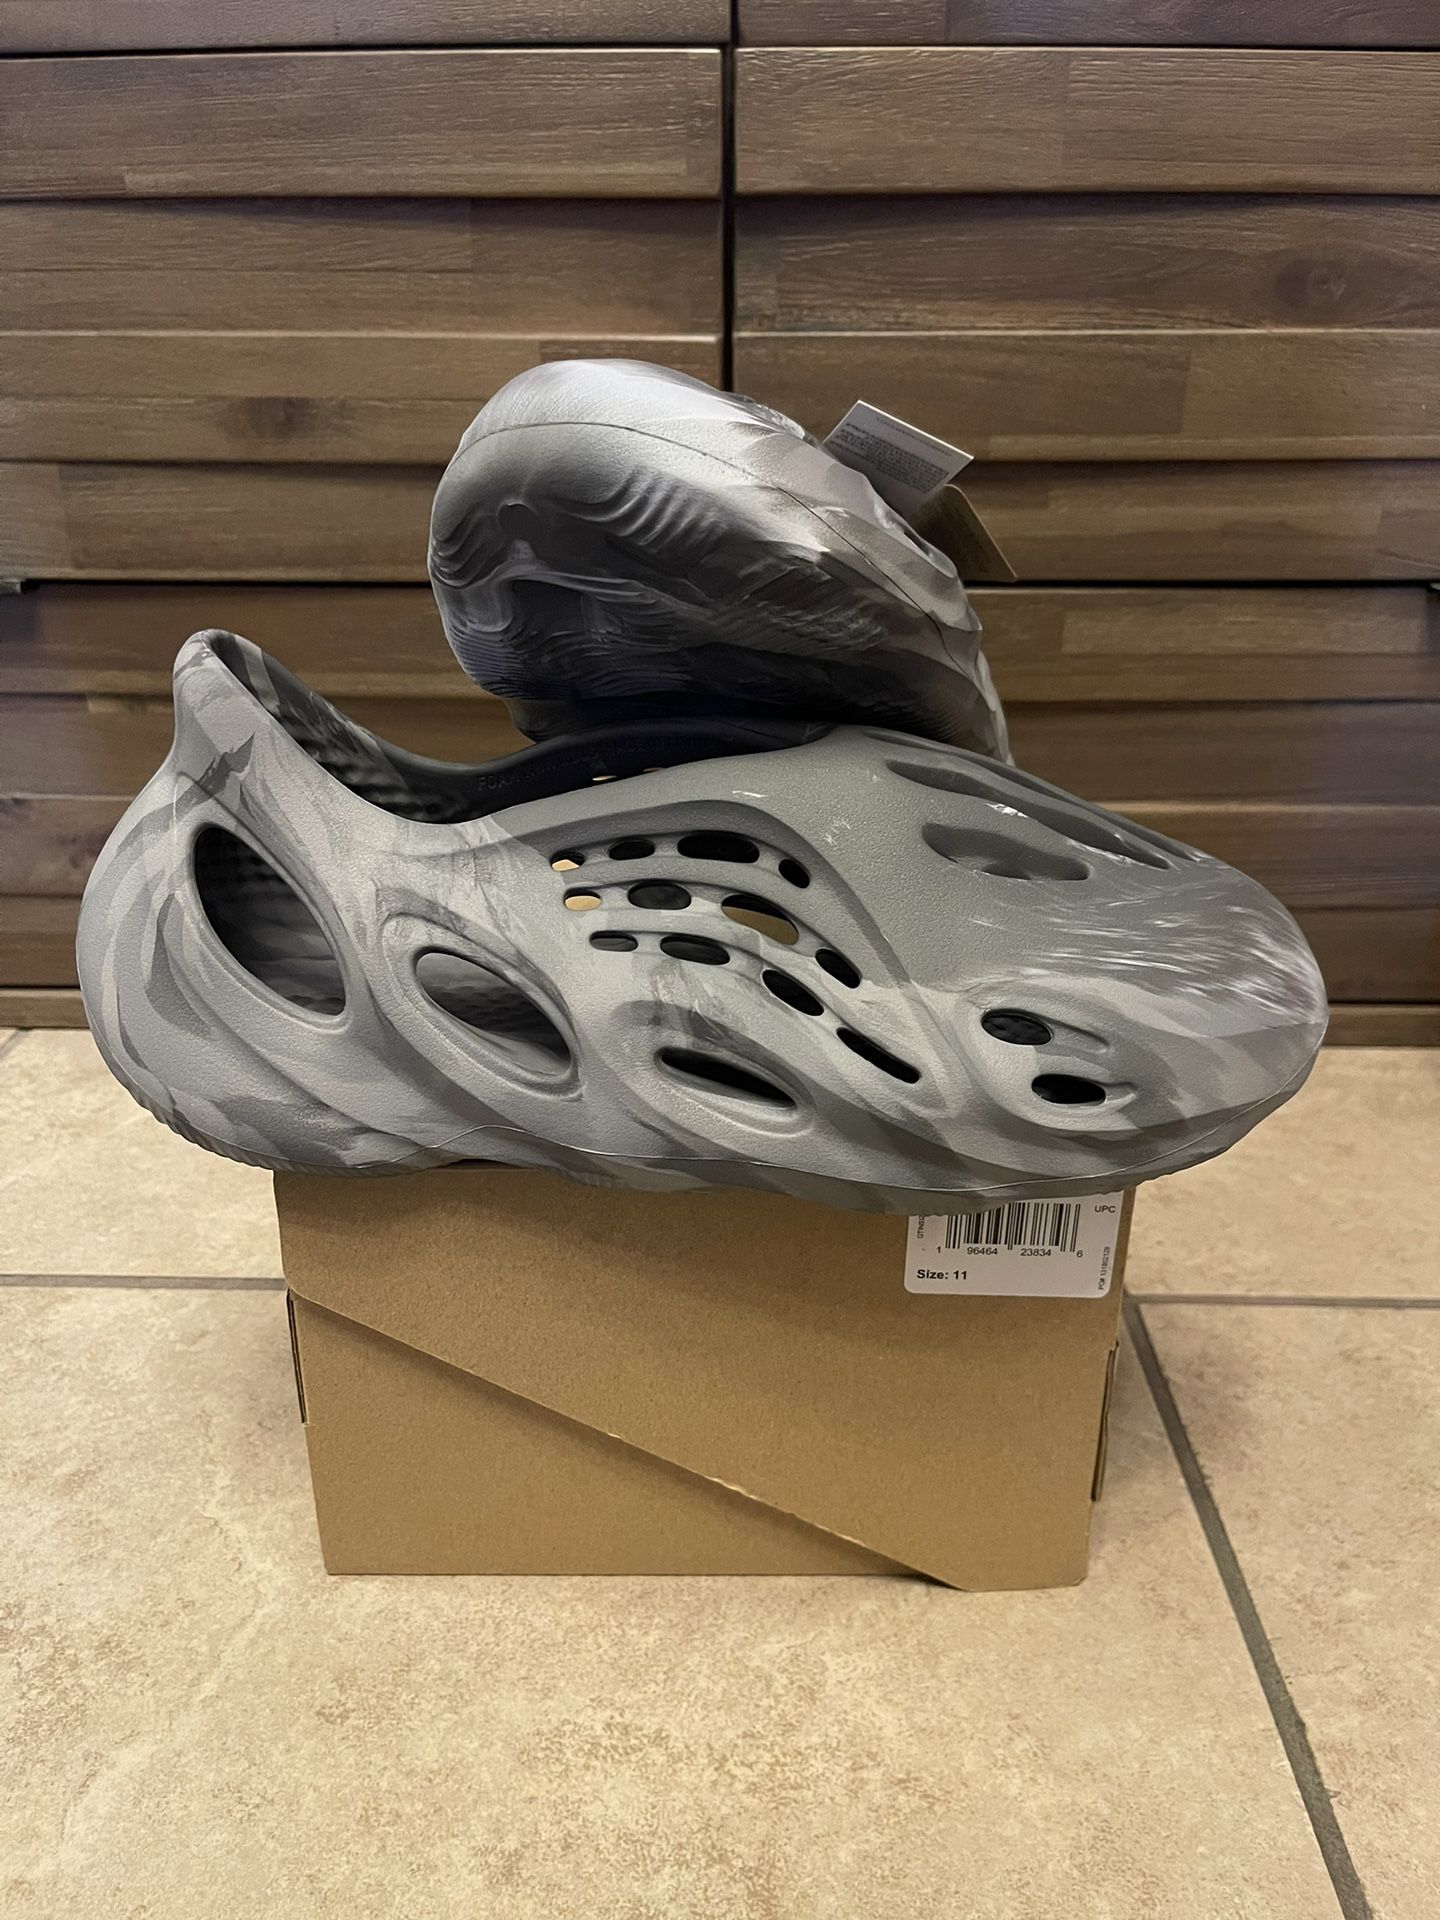 Adidas Yeezy Foam Runner “Granite” Size 11